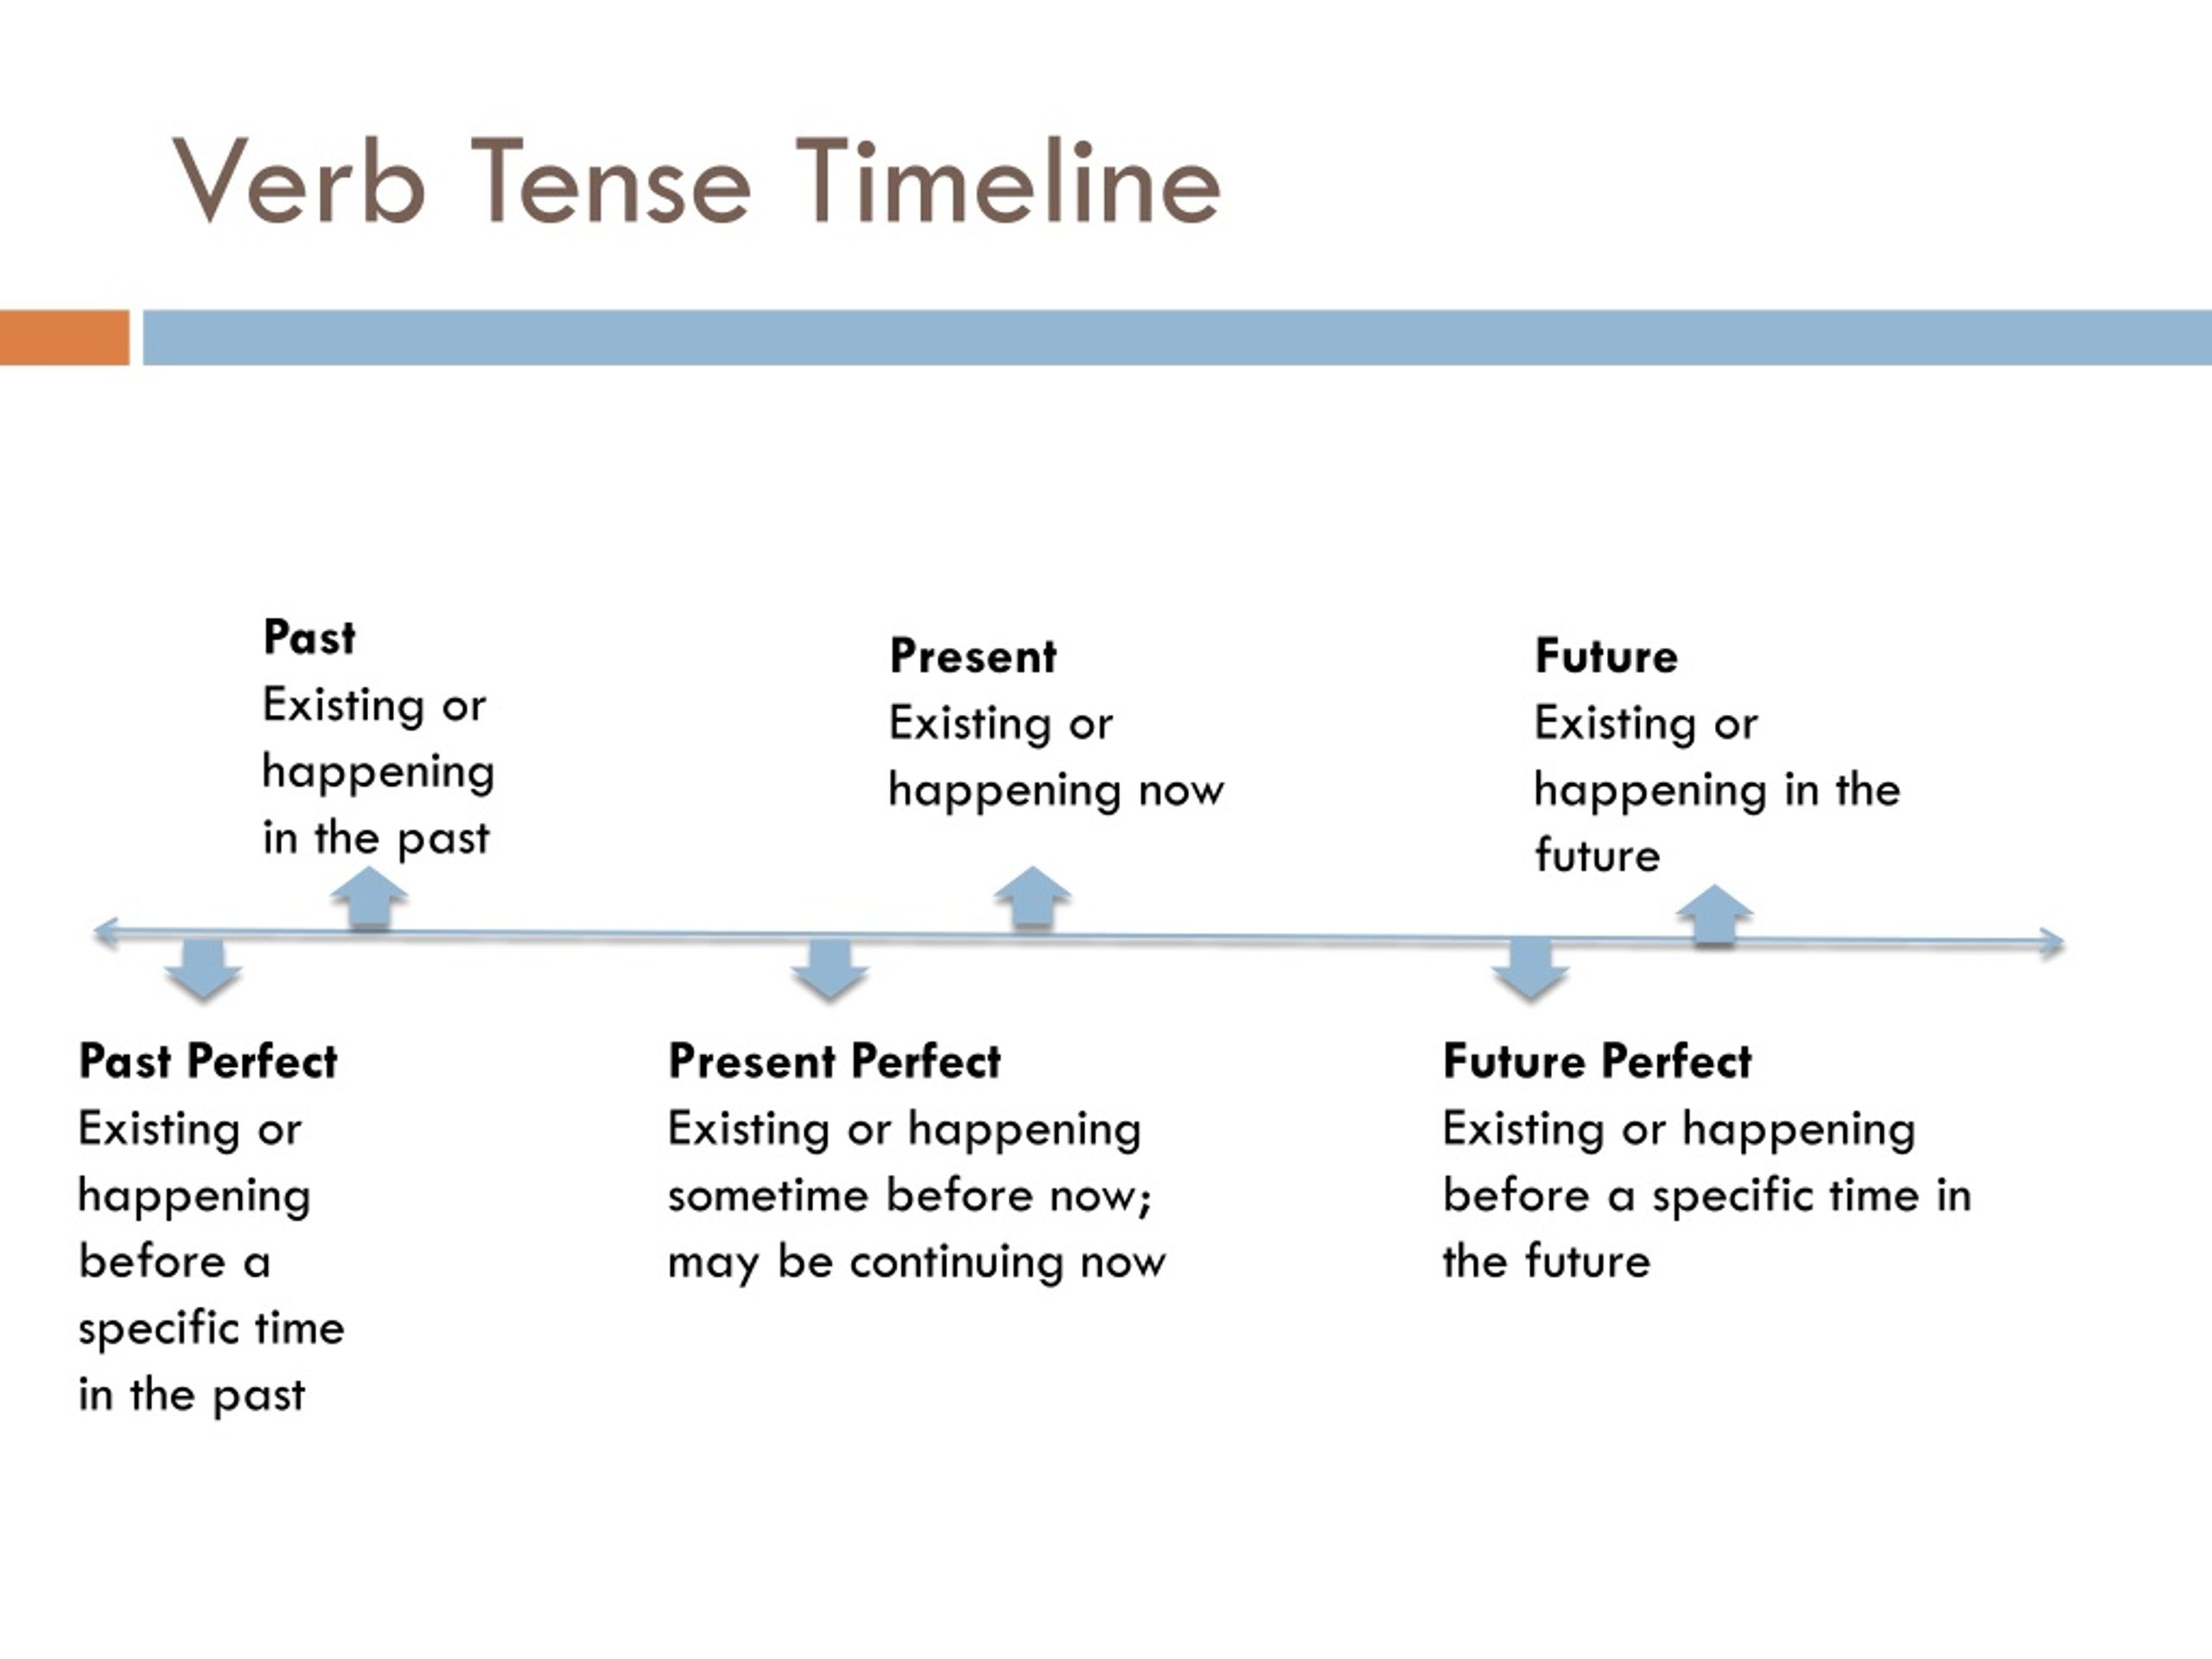 Present tense future perfect. Present perfect шкала времени. Timeline в английском языке. Present perfect на временной шкале. Past perfect timeline.